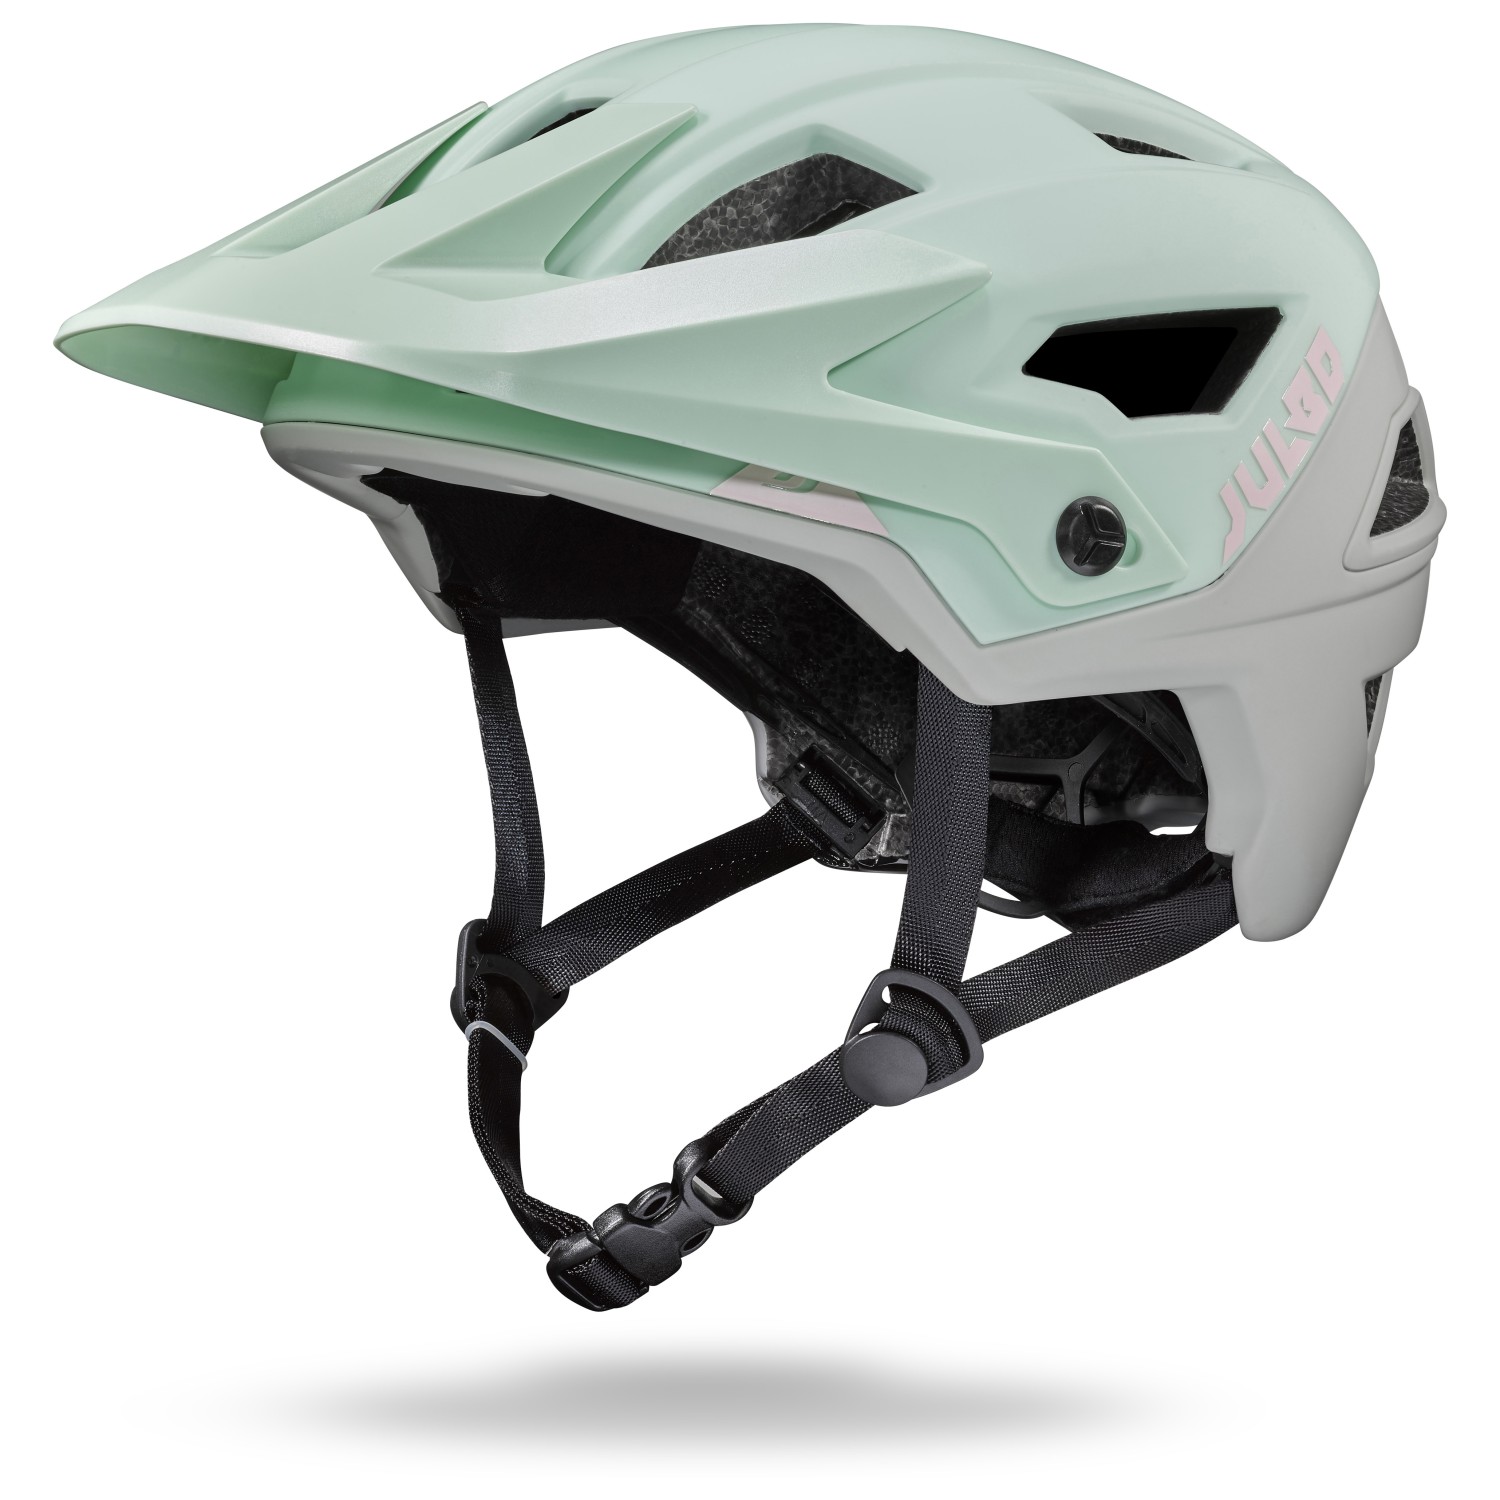 Велосипедный шлем Julbo Rock, цвет Mint/Grey шлем велосипедный stern зеленый размер 52 56